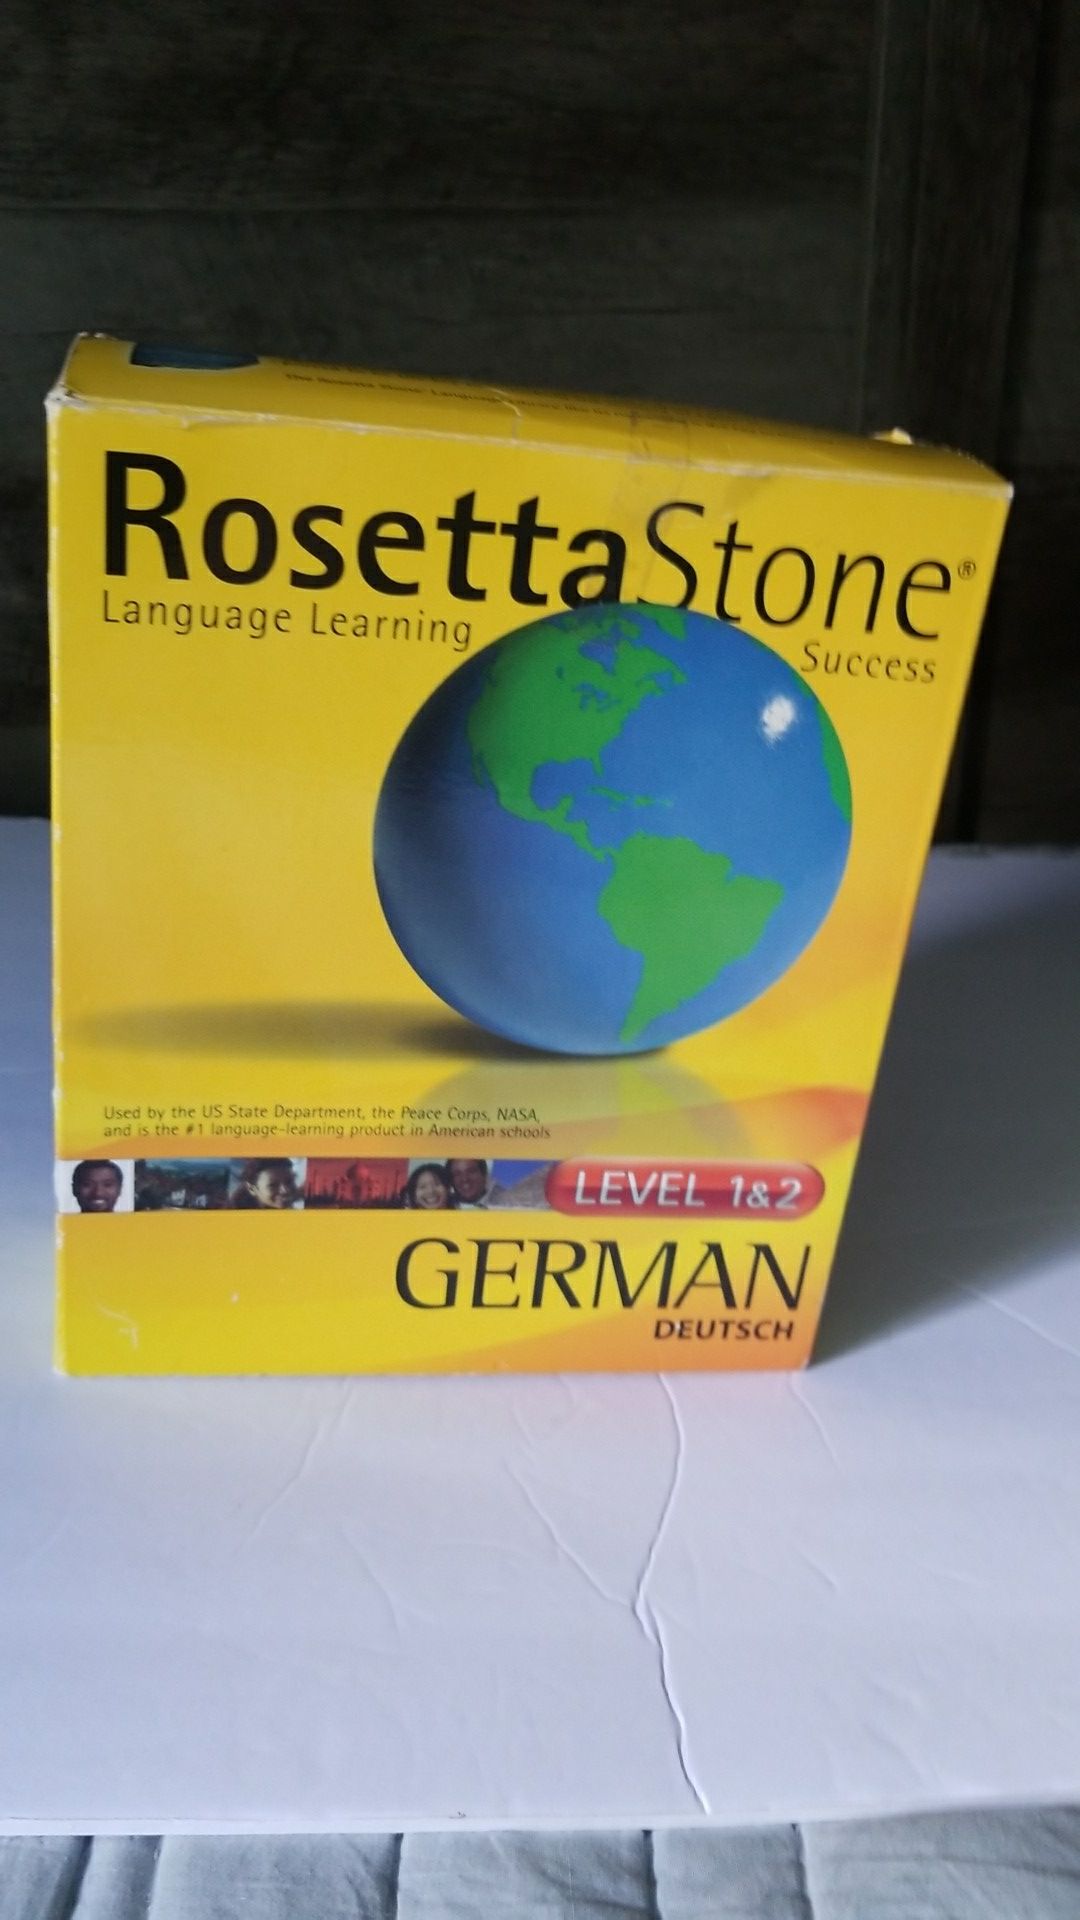 Rosetta Stone German level 1&2